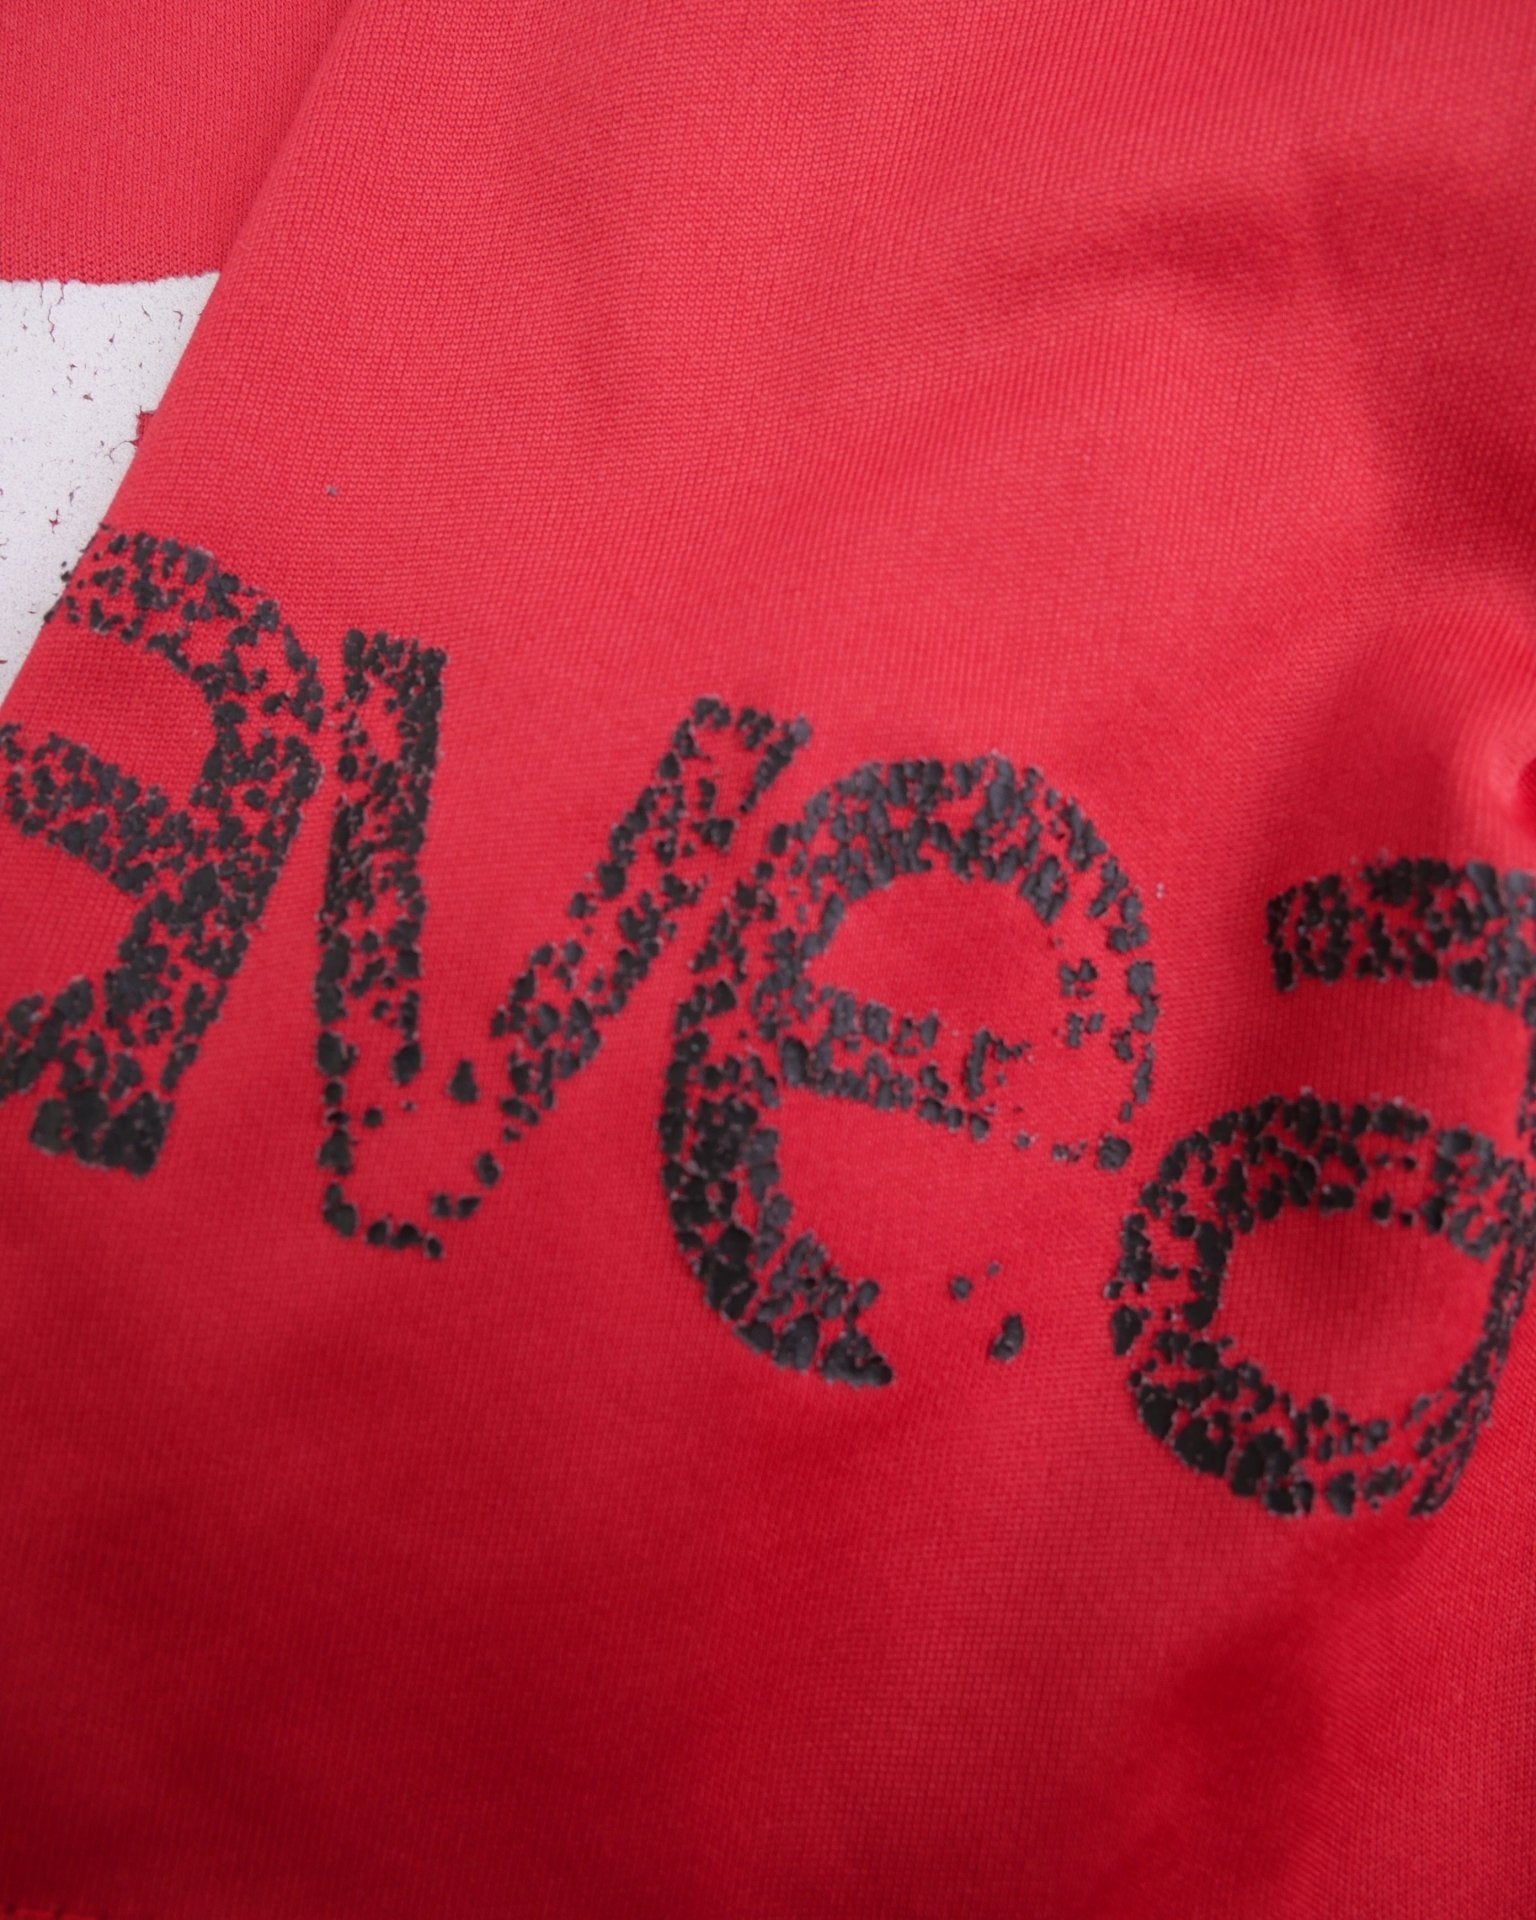 nike embroidered Logo 'Galatasaray' Soccer Jersey Shirt - Peeces